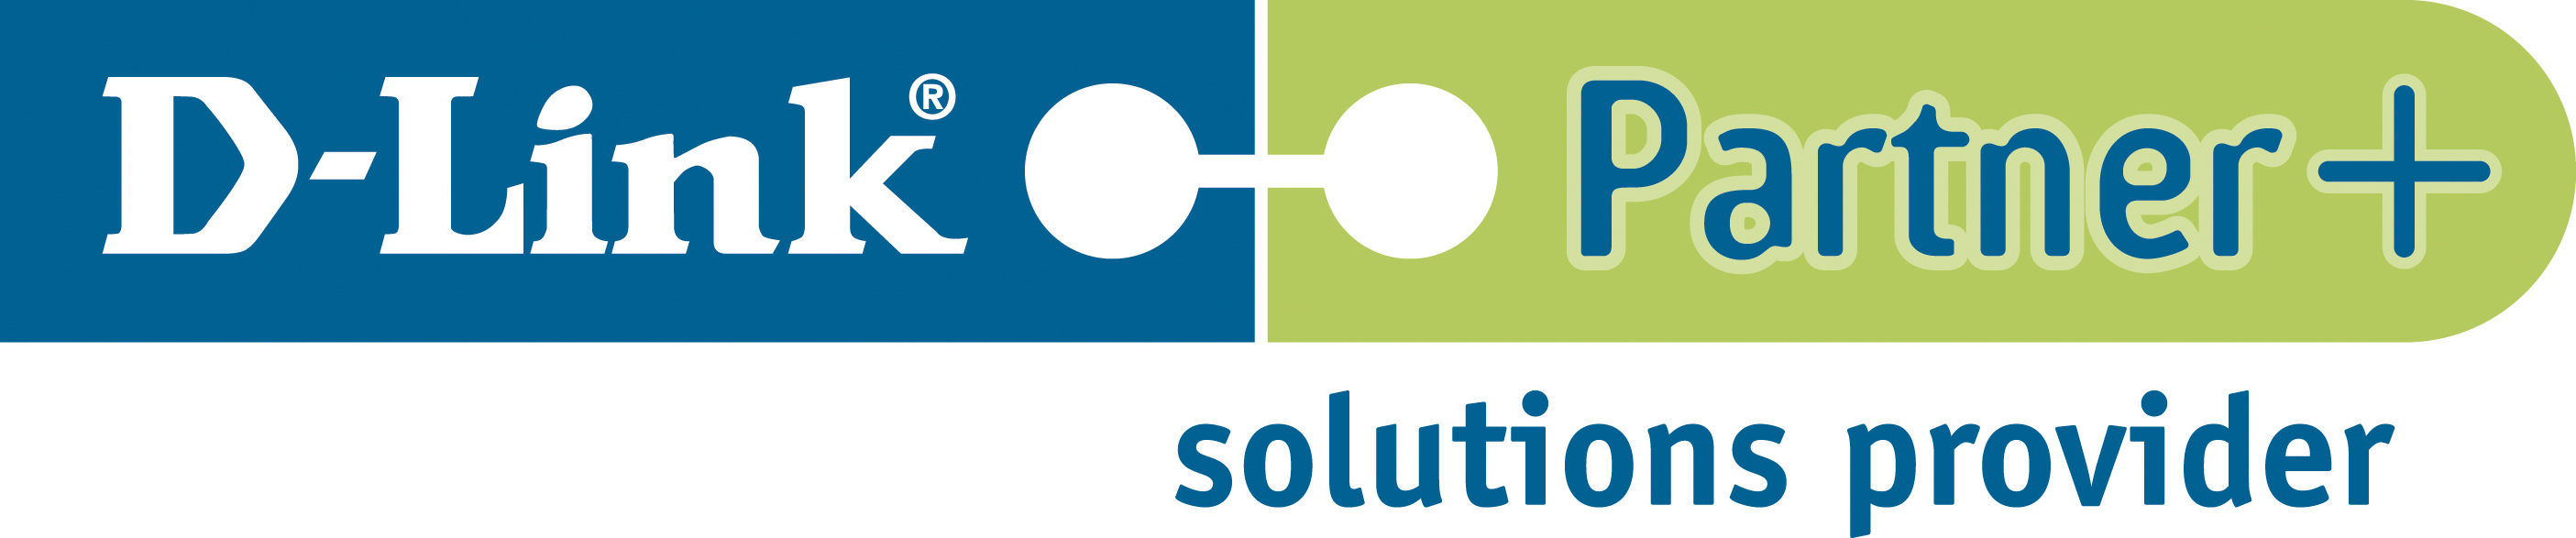 DLink partner solutions